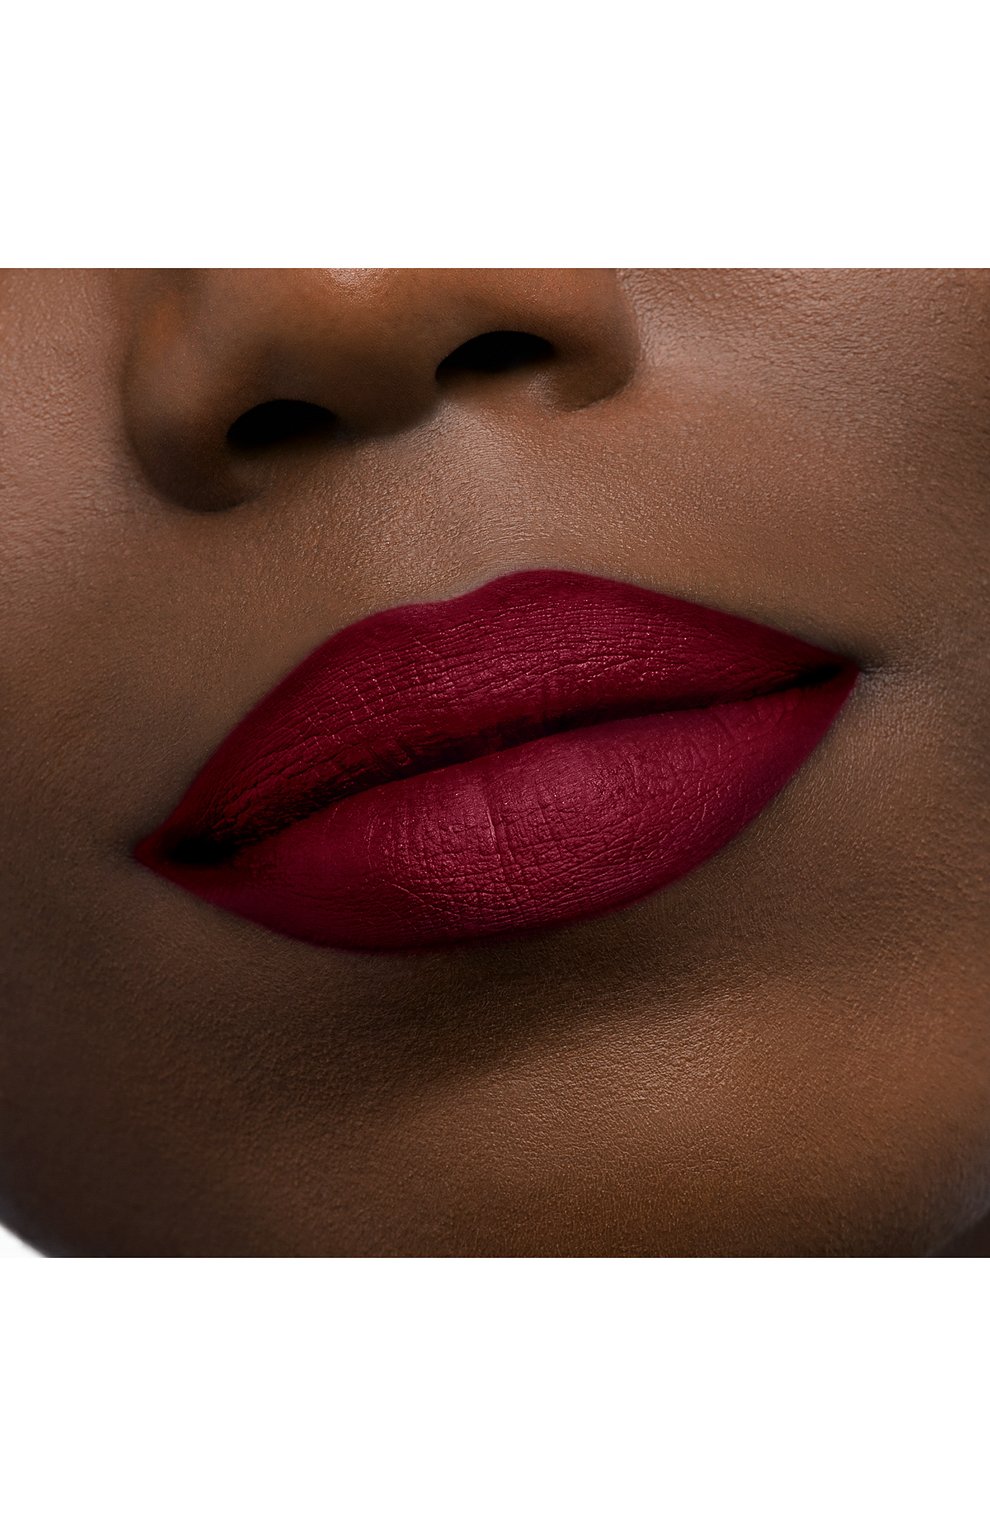 Матовая помада для губ rouge louboutin velvet matte on the go, оттенок retro berry CHRISTIAN LOUBOUTIN  цвета, арт. 8435415063302 | Фото 7 (Финишное покрытие: Матовый)